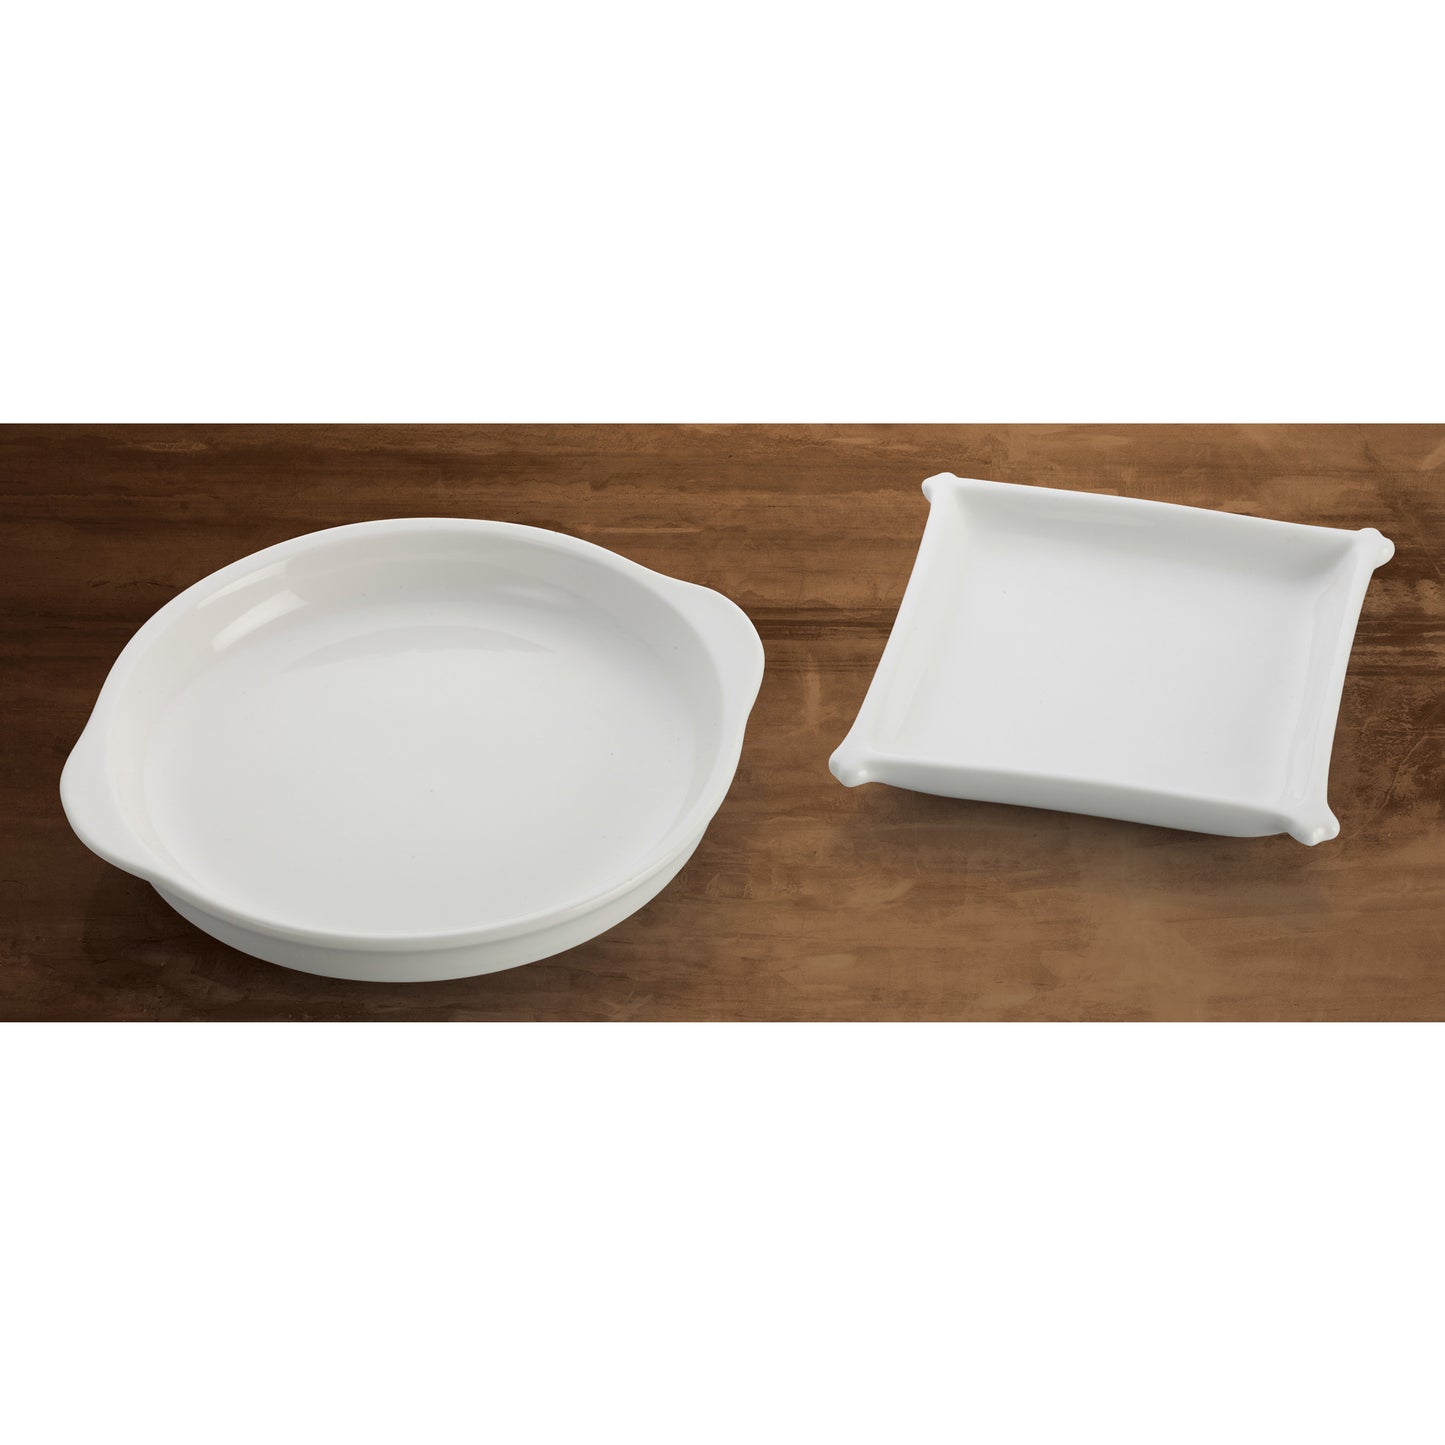 WDP018-104 - 11" Porcelain Round Dish, Bright White, 12 pcs/case